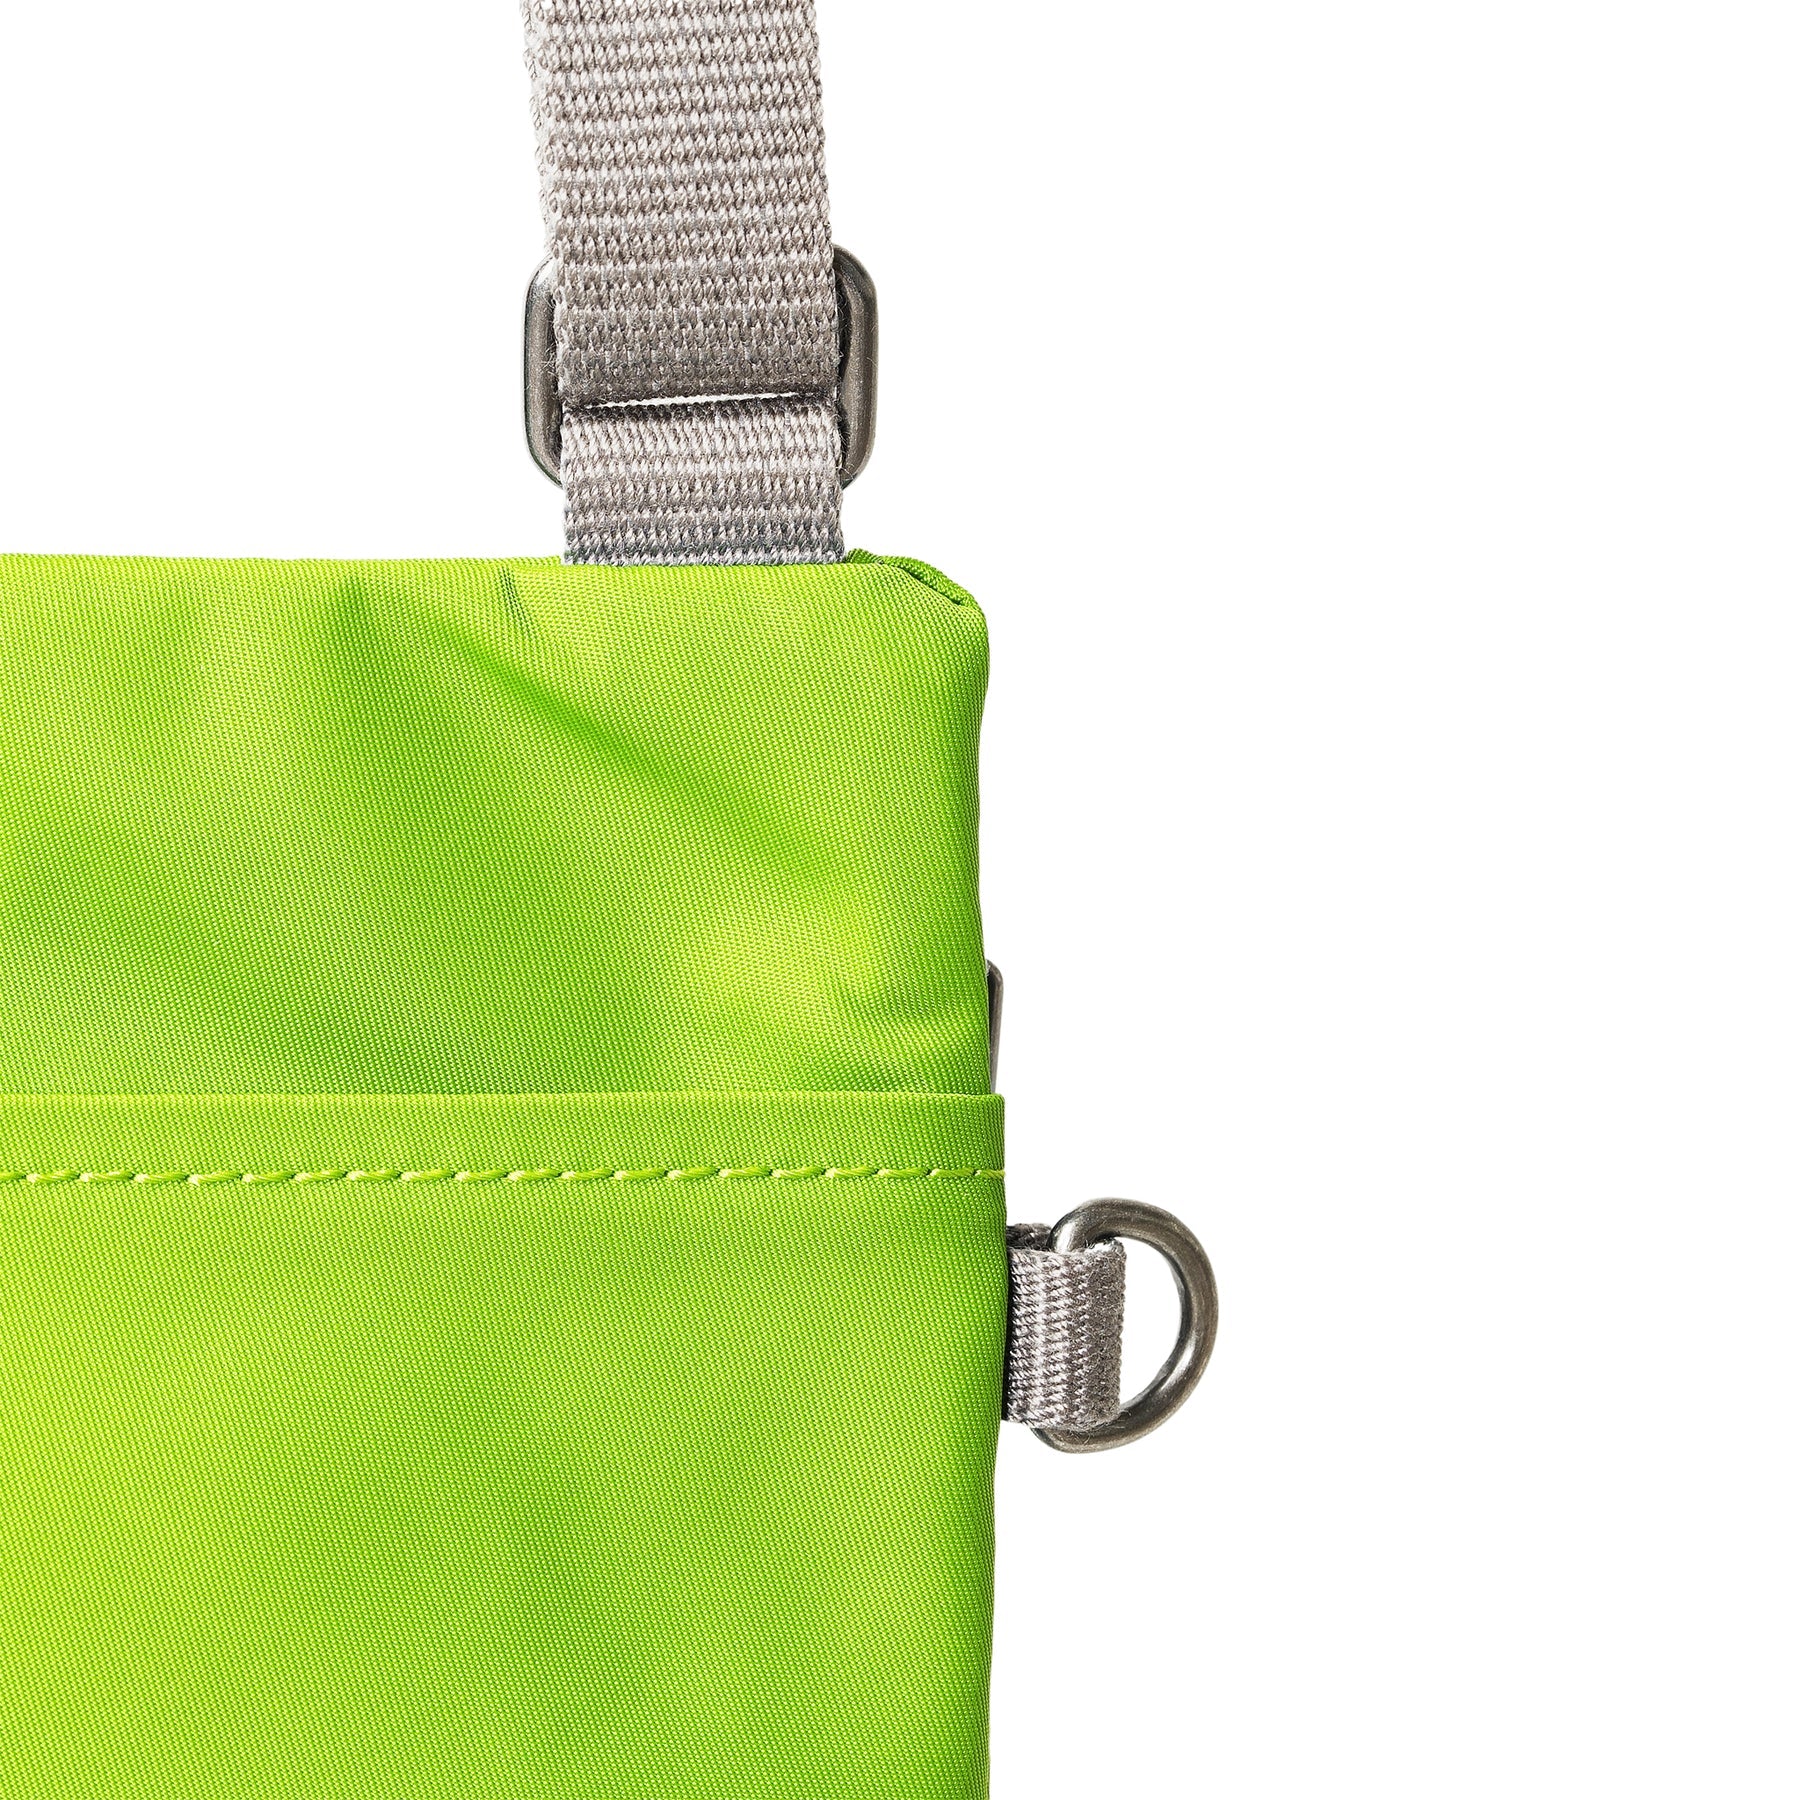 ORI Chelsea Recycled Nylon Crossbody Extra Pocket Bag – Lime